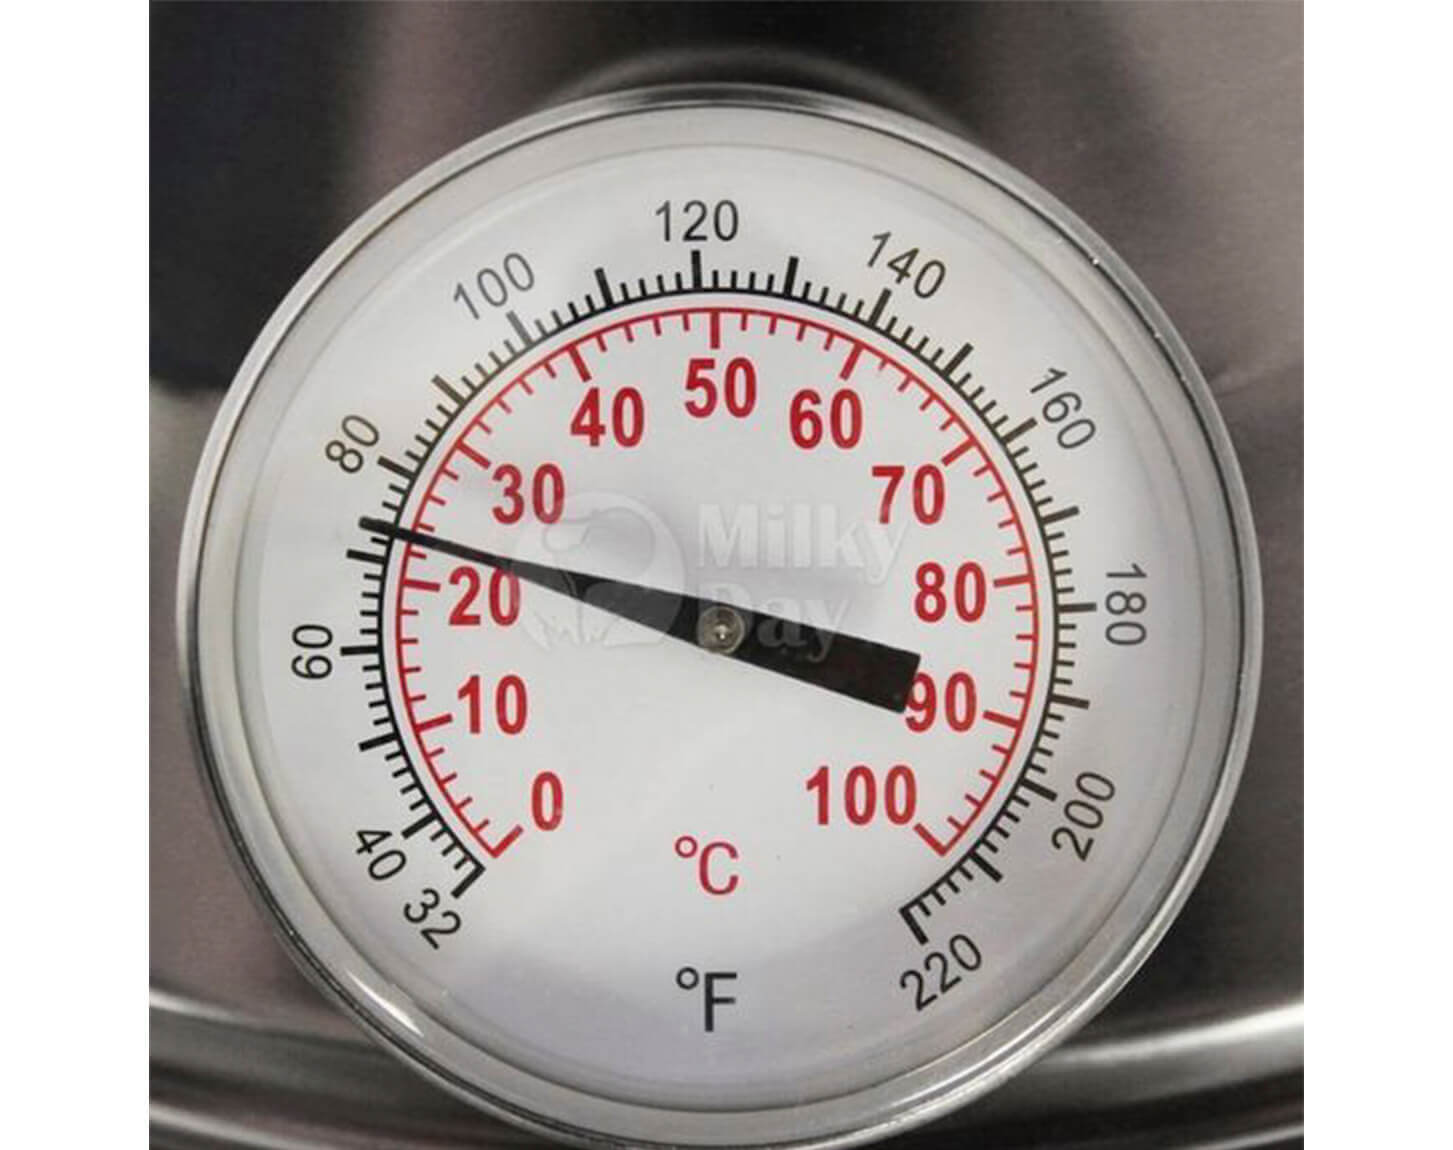 Analogue yoghurt thermometer